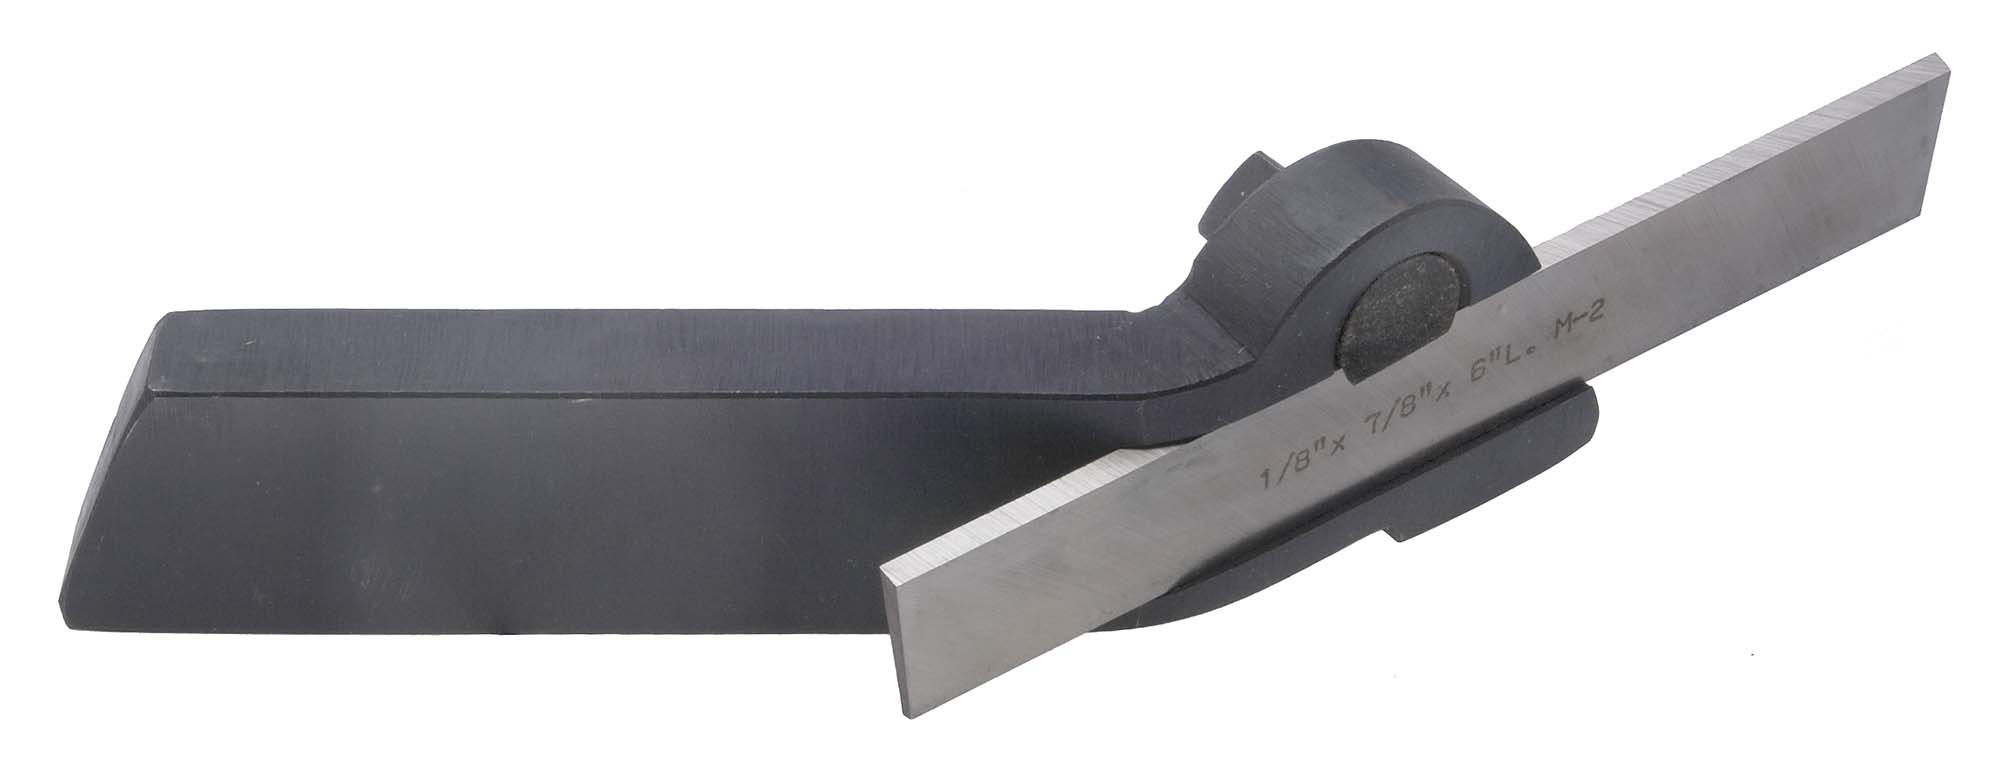 3/8 X 7/8 Shank Left Hand Lathe Cutoff Tool Holder, holds 3/32 x 5/8" Blades